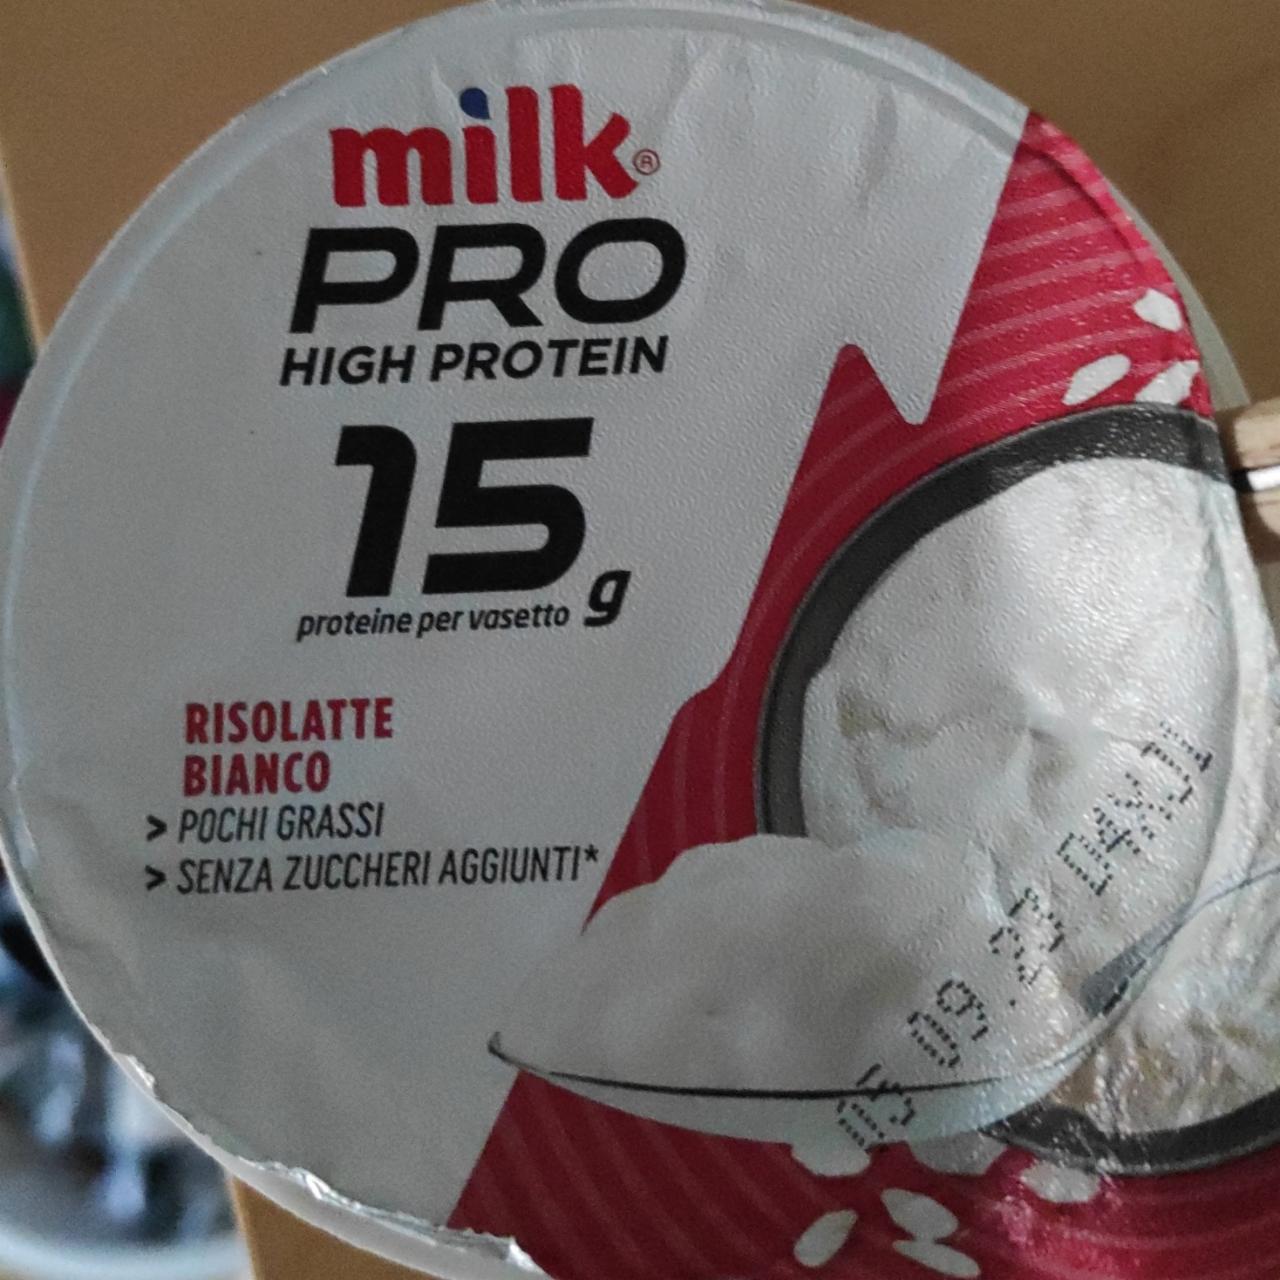 Fotografie - Pro High Protein 15g Risolatte Bianco Milk